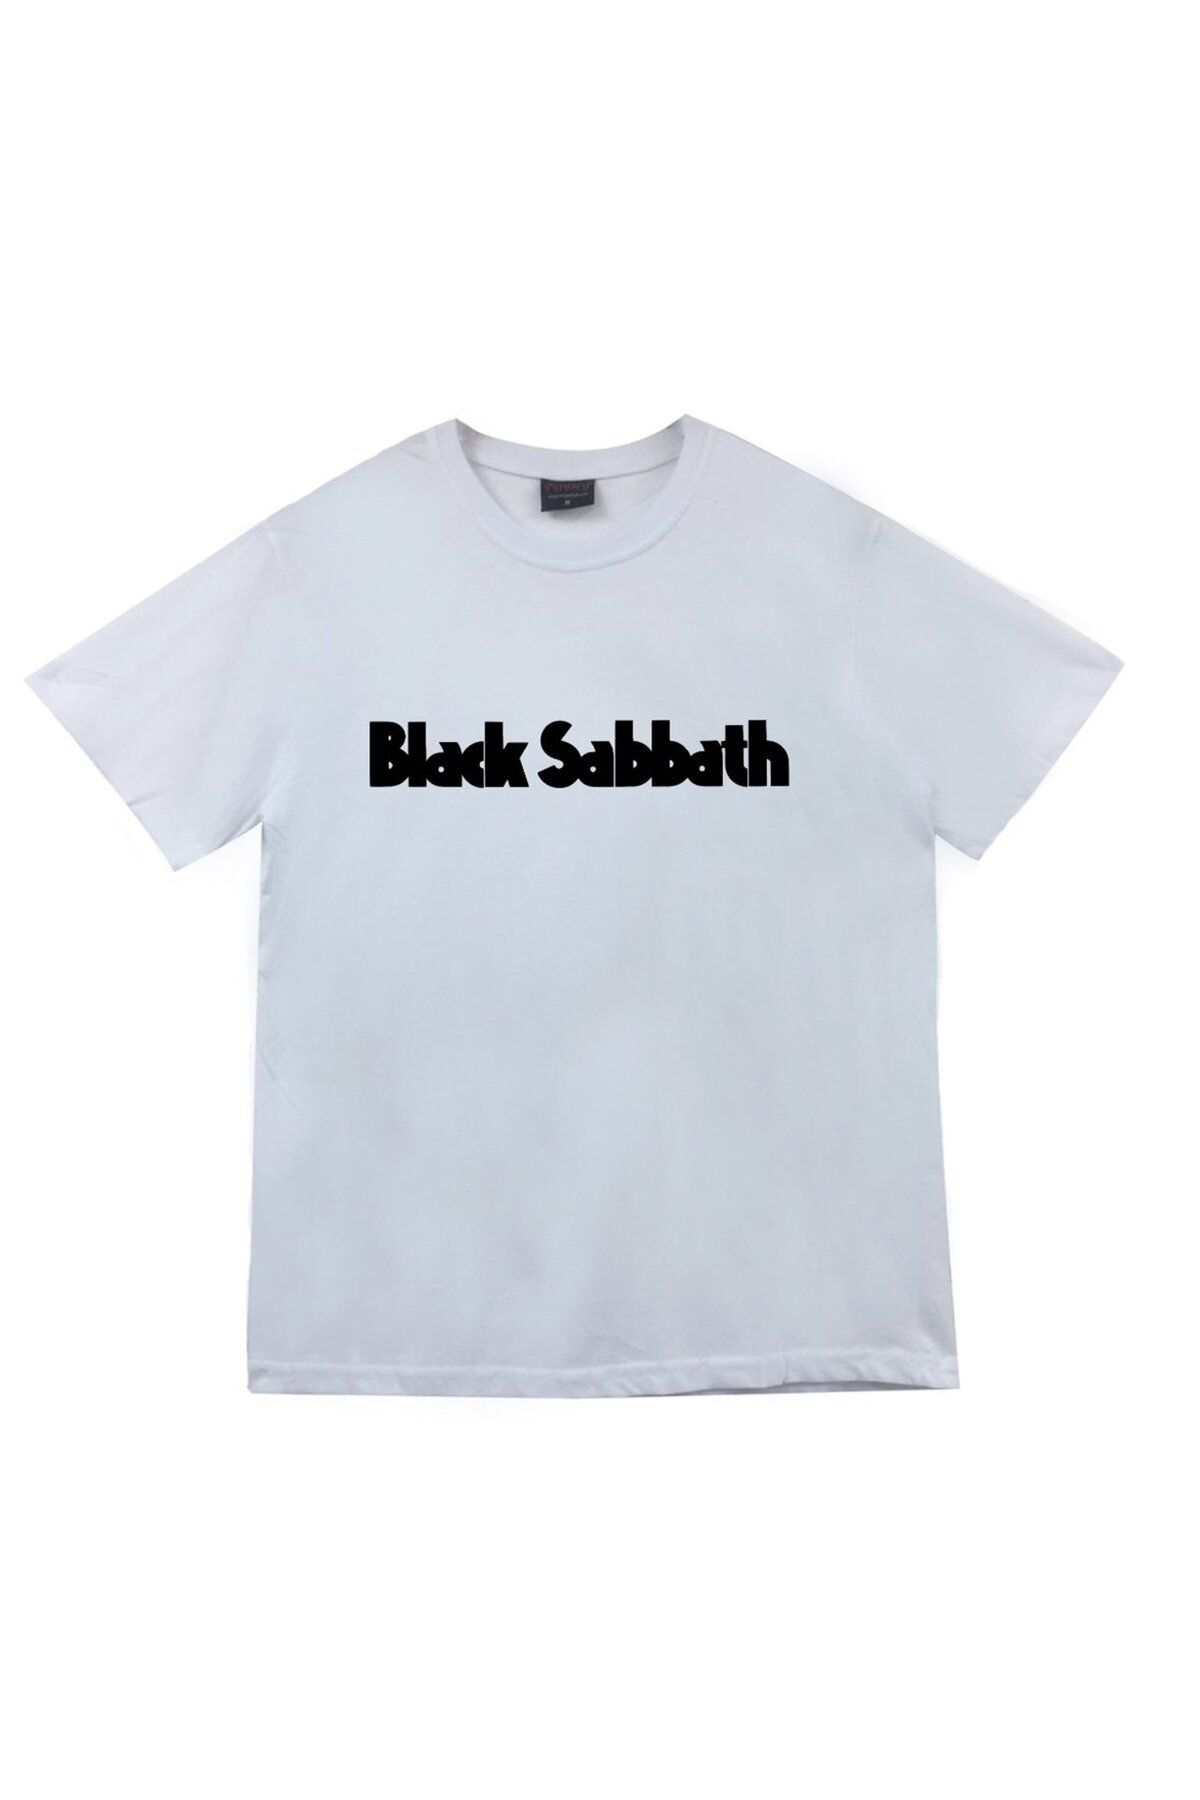 fame-stoned Black Sabbath Baskılı T-shirt